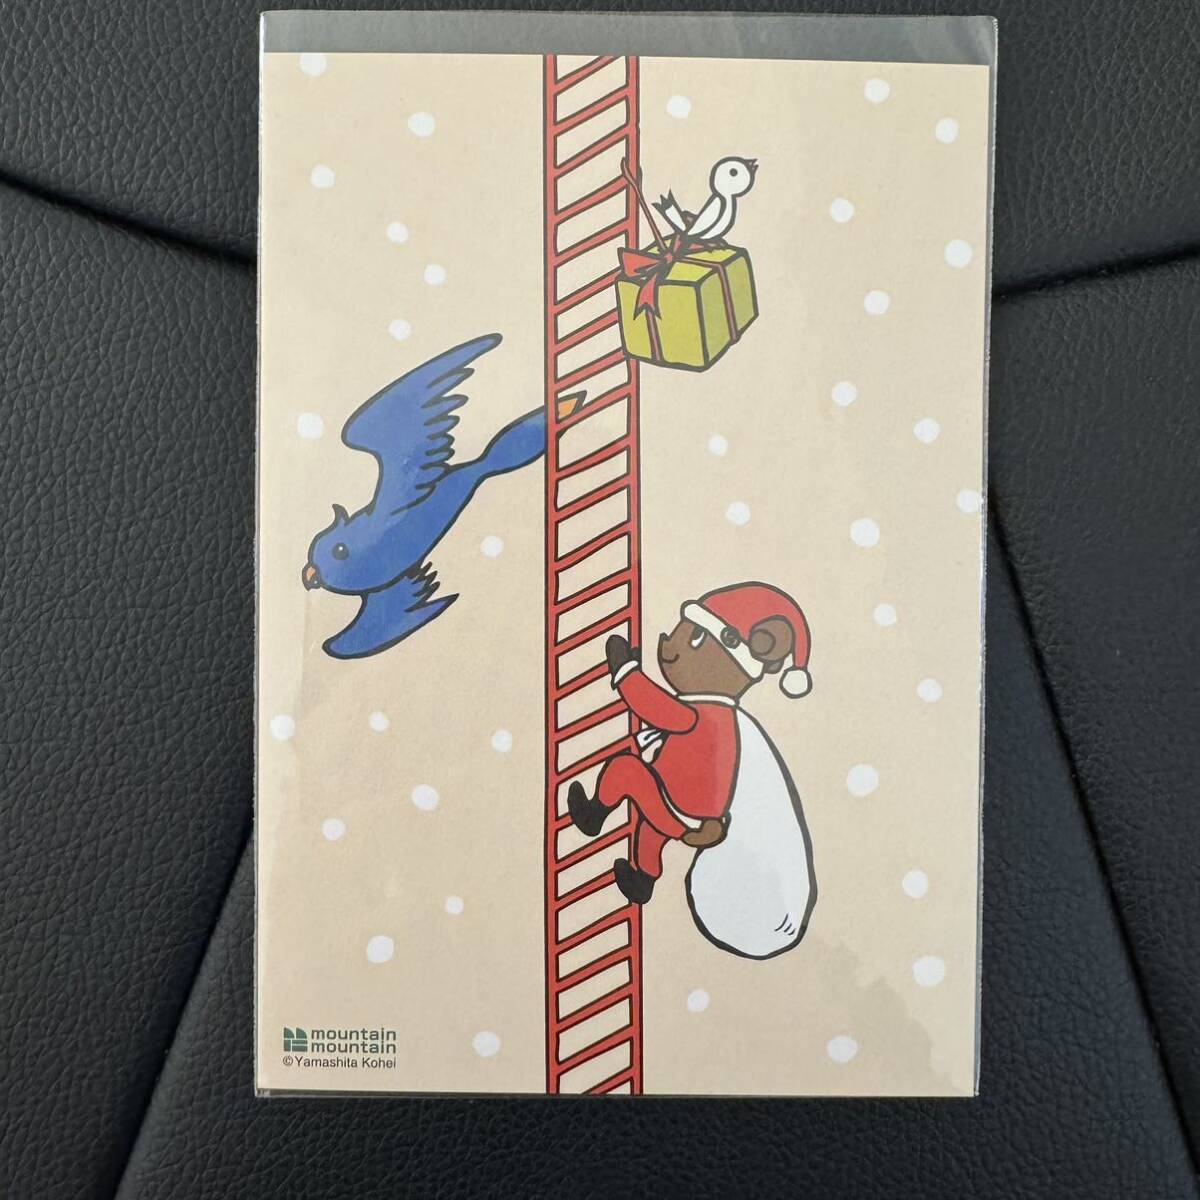 ★Berg Berg Kohei Yamashita Bär Weihnachtsmann Postkarte★Weihnachtspostkarte Yamashita Kohei Blue Bird Osaka Expo, Antiquität, Sammlung, verschiedene Waren, Andere